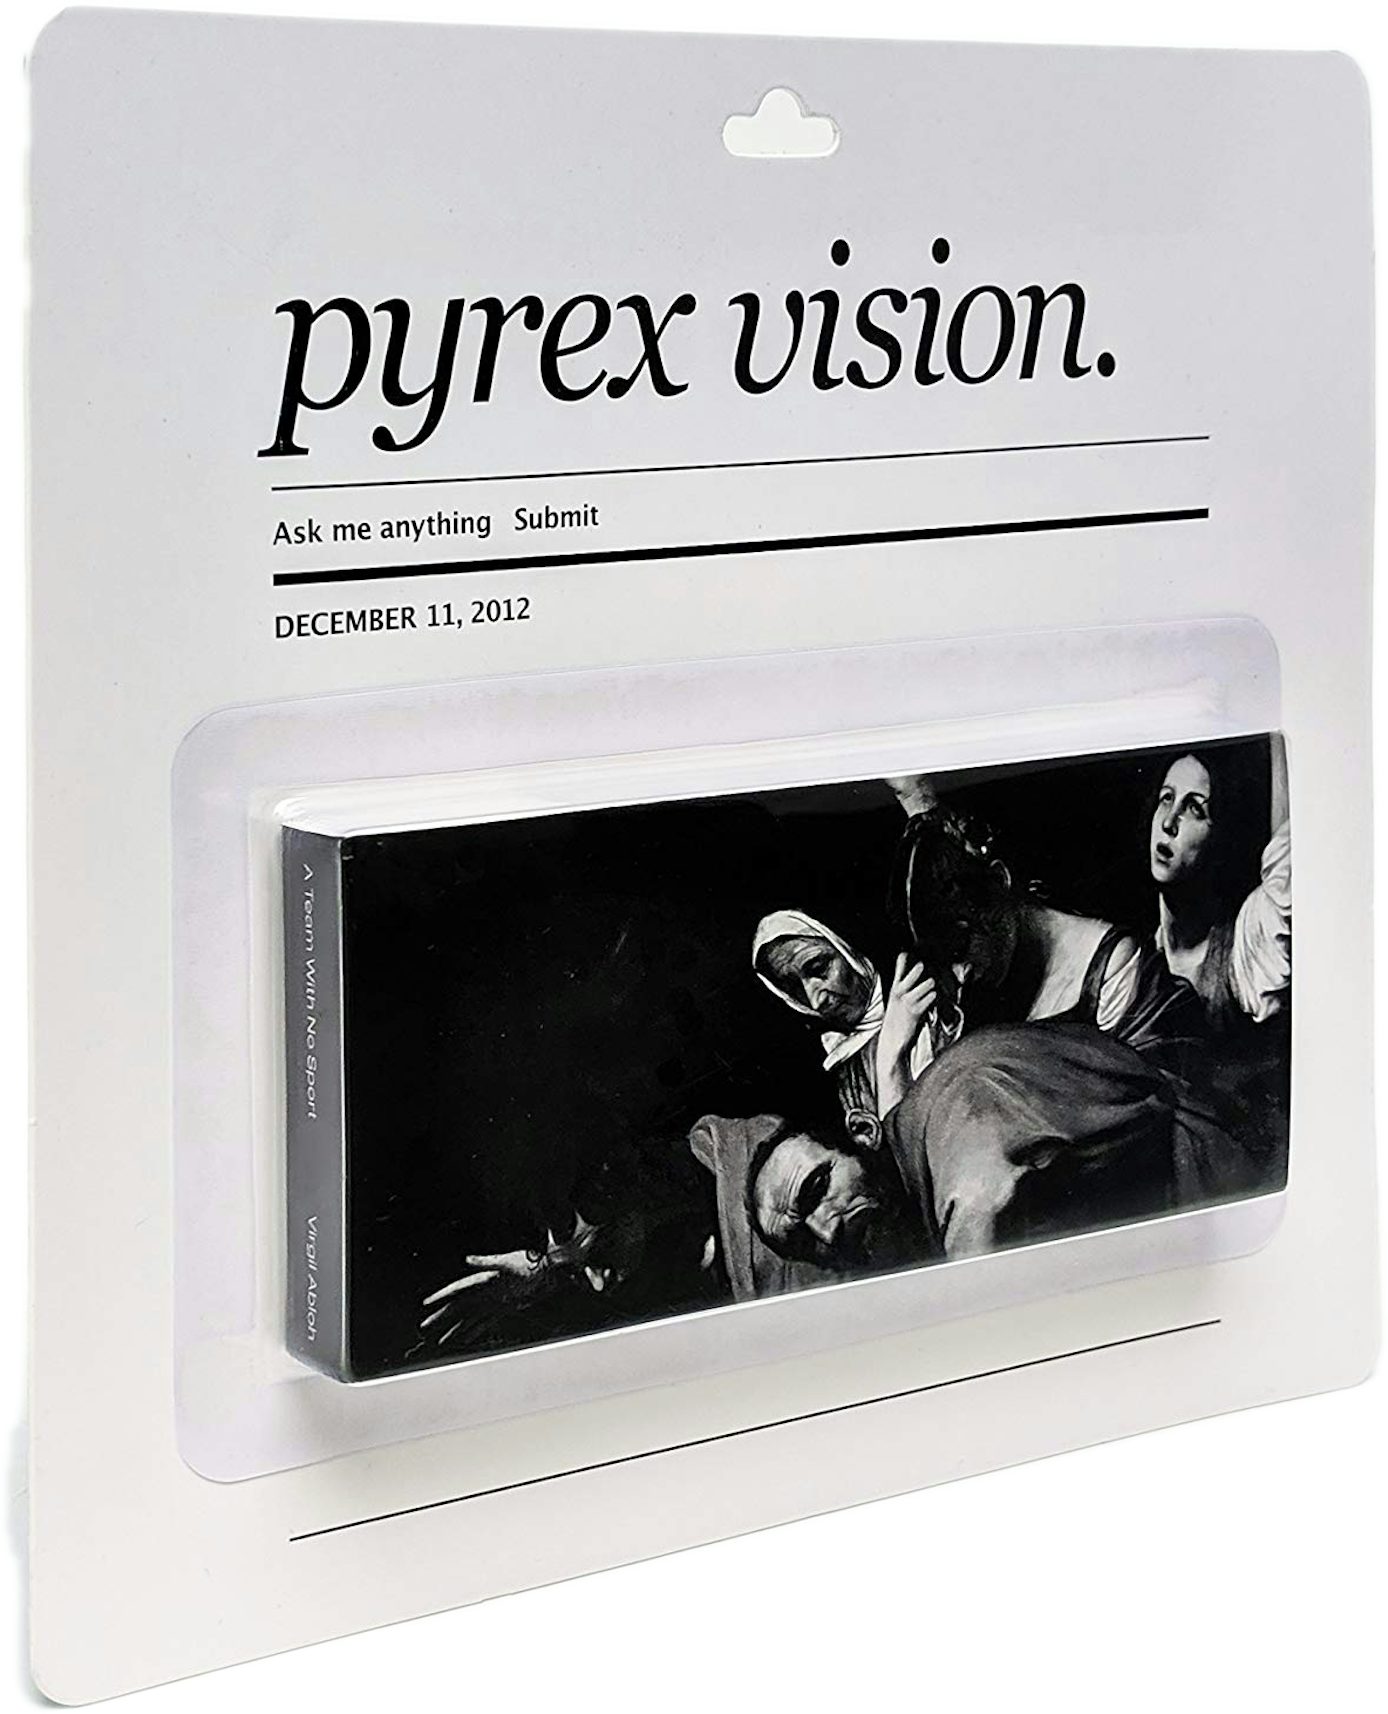 MCA限定 Chicago Virgil Abloh Pyrex Vision